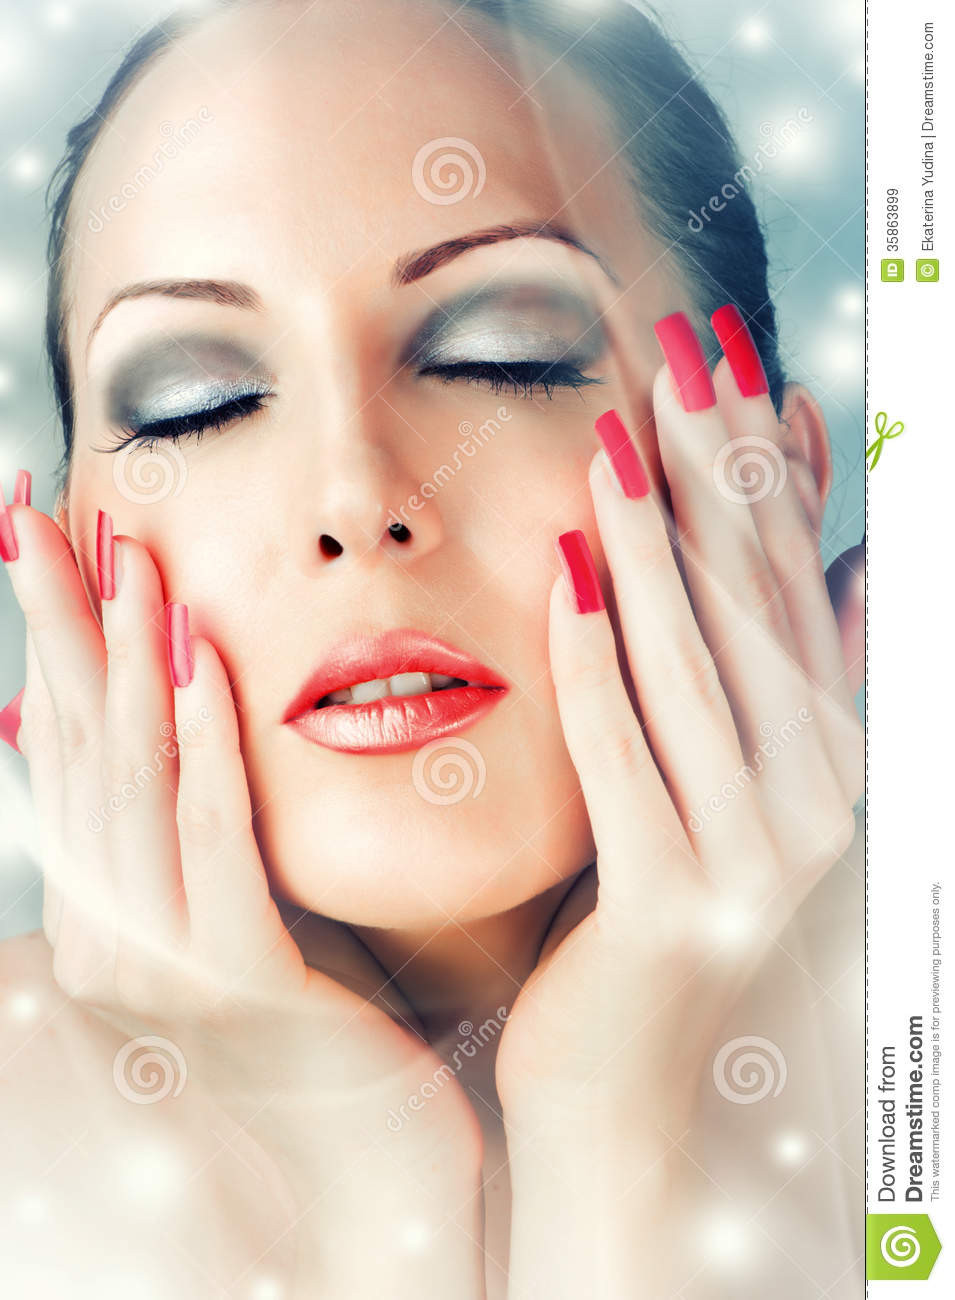 Beautiful Skin And Nails
 Winter Skin Care Beautiful Female Face Stock Image